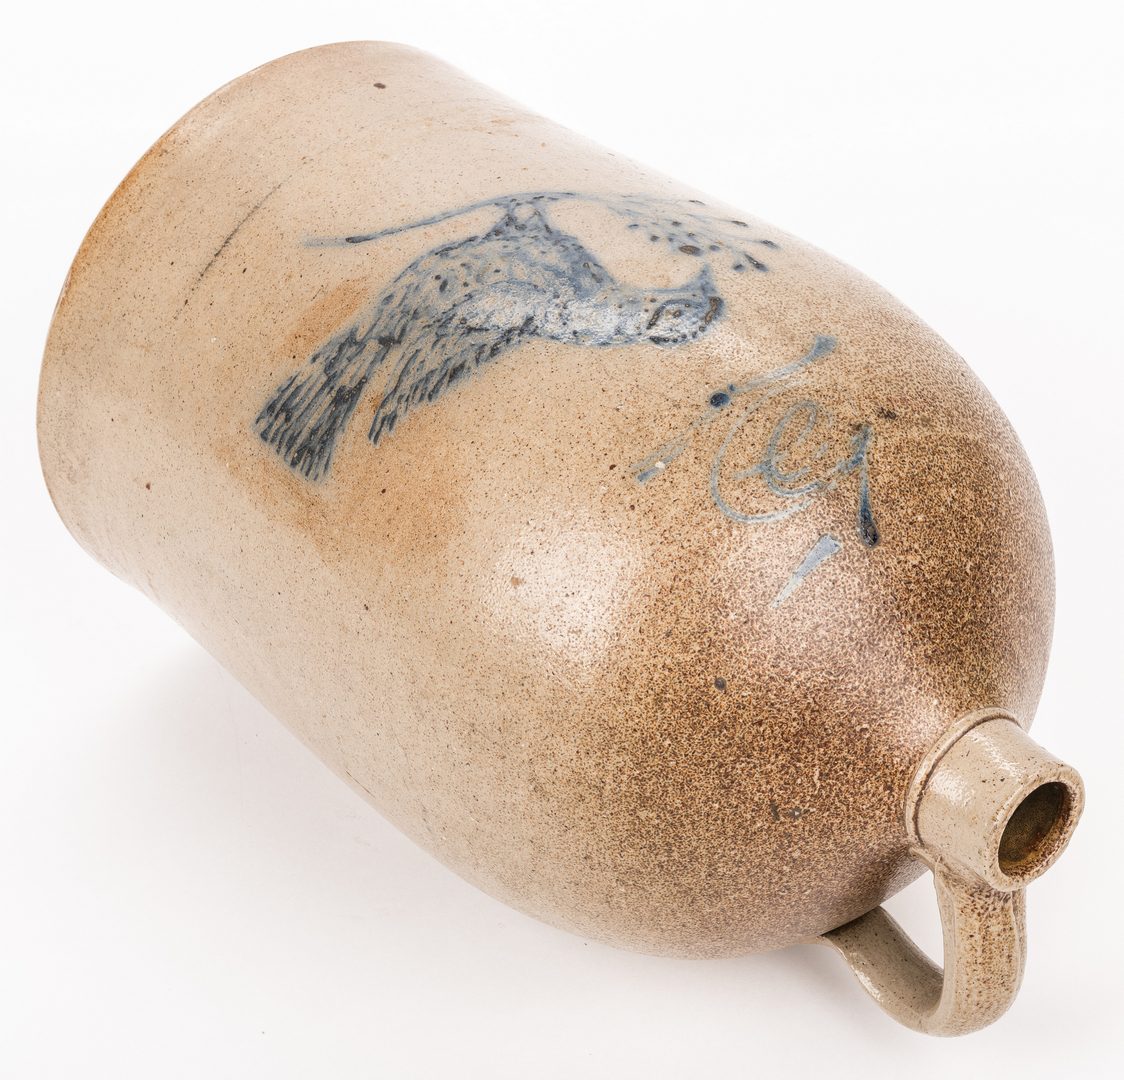 Lot 195: Mid-Atlantic Stoneware Jug, 5 gallon with bird